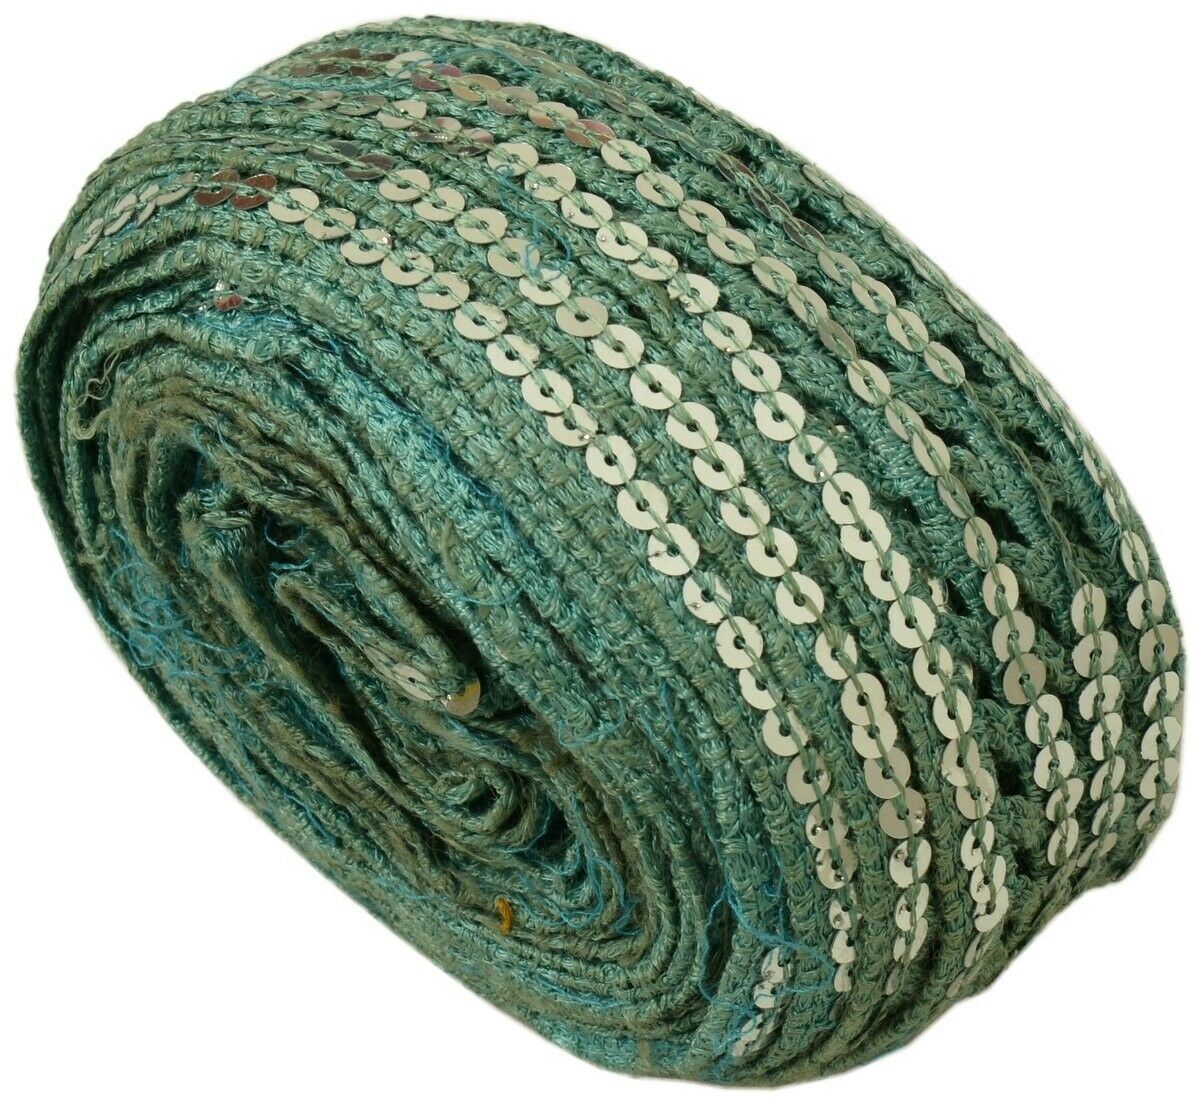 Vintage Sari Border Indian Craft Trim Sequins Embroidered Ribbon Lace Green